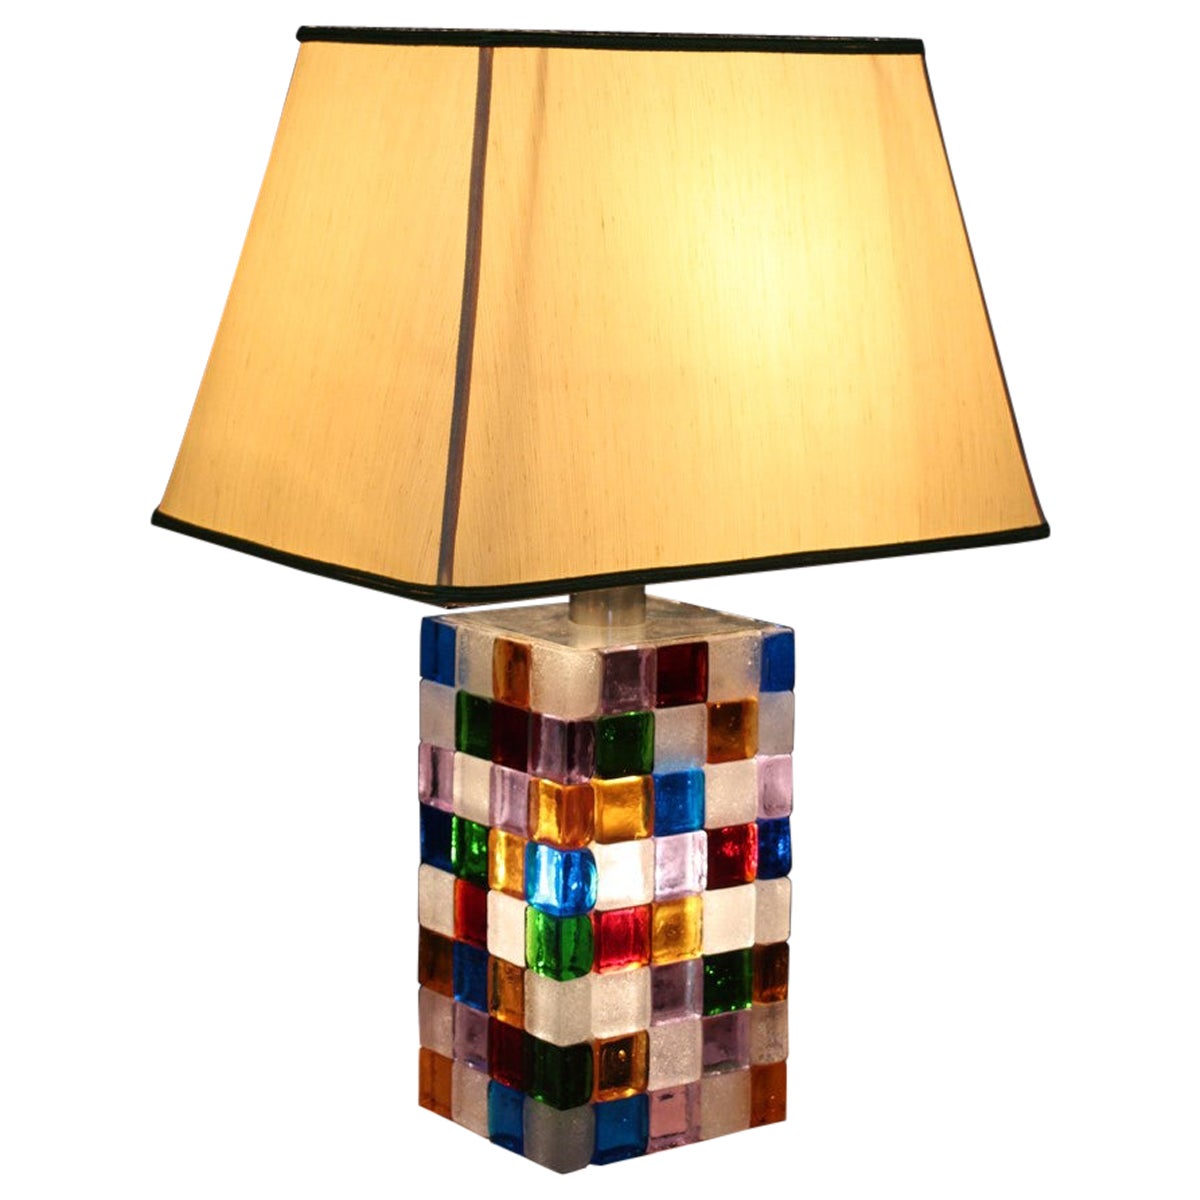 Colored Table Lamp Flavio Poli for Poliarte 1970s Italian Design Pop Art